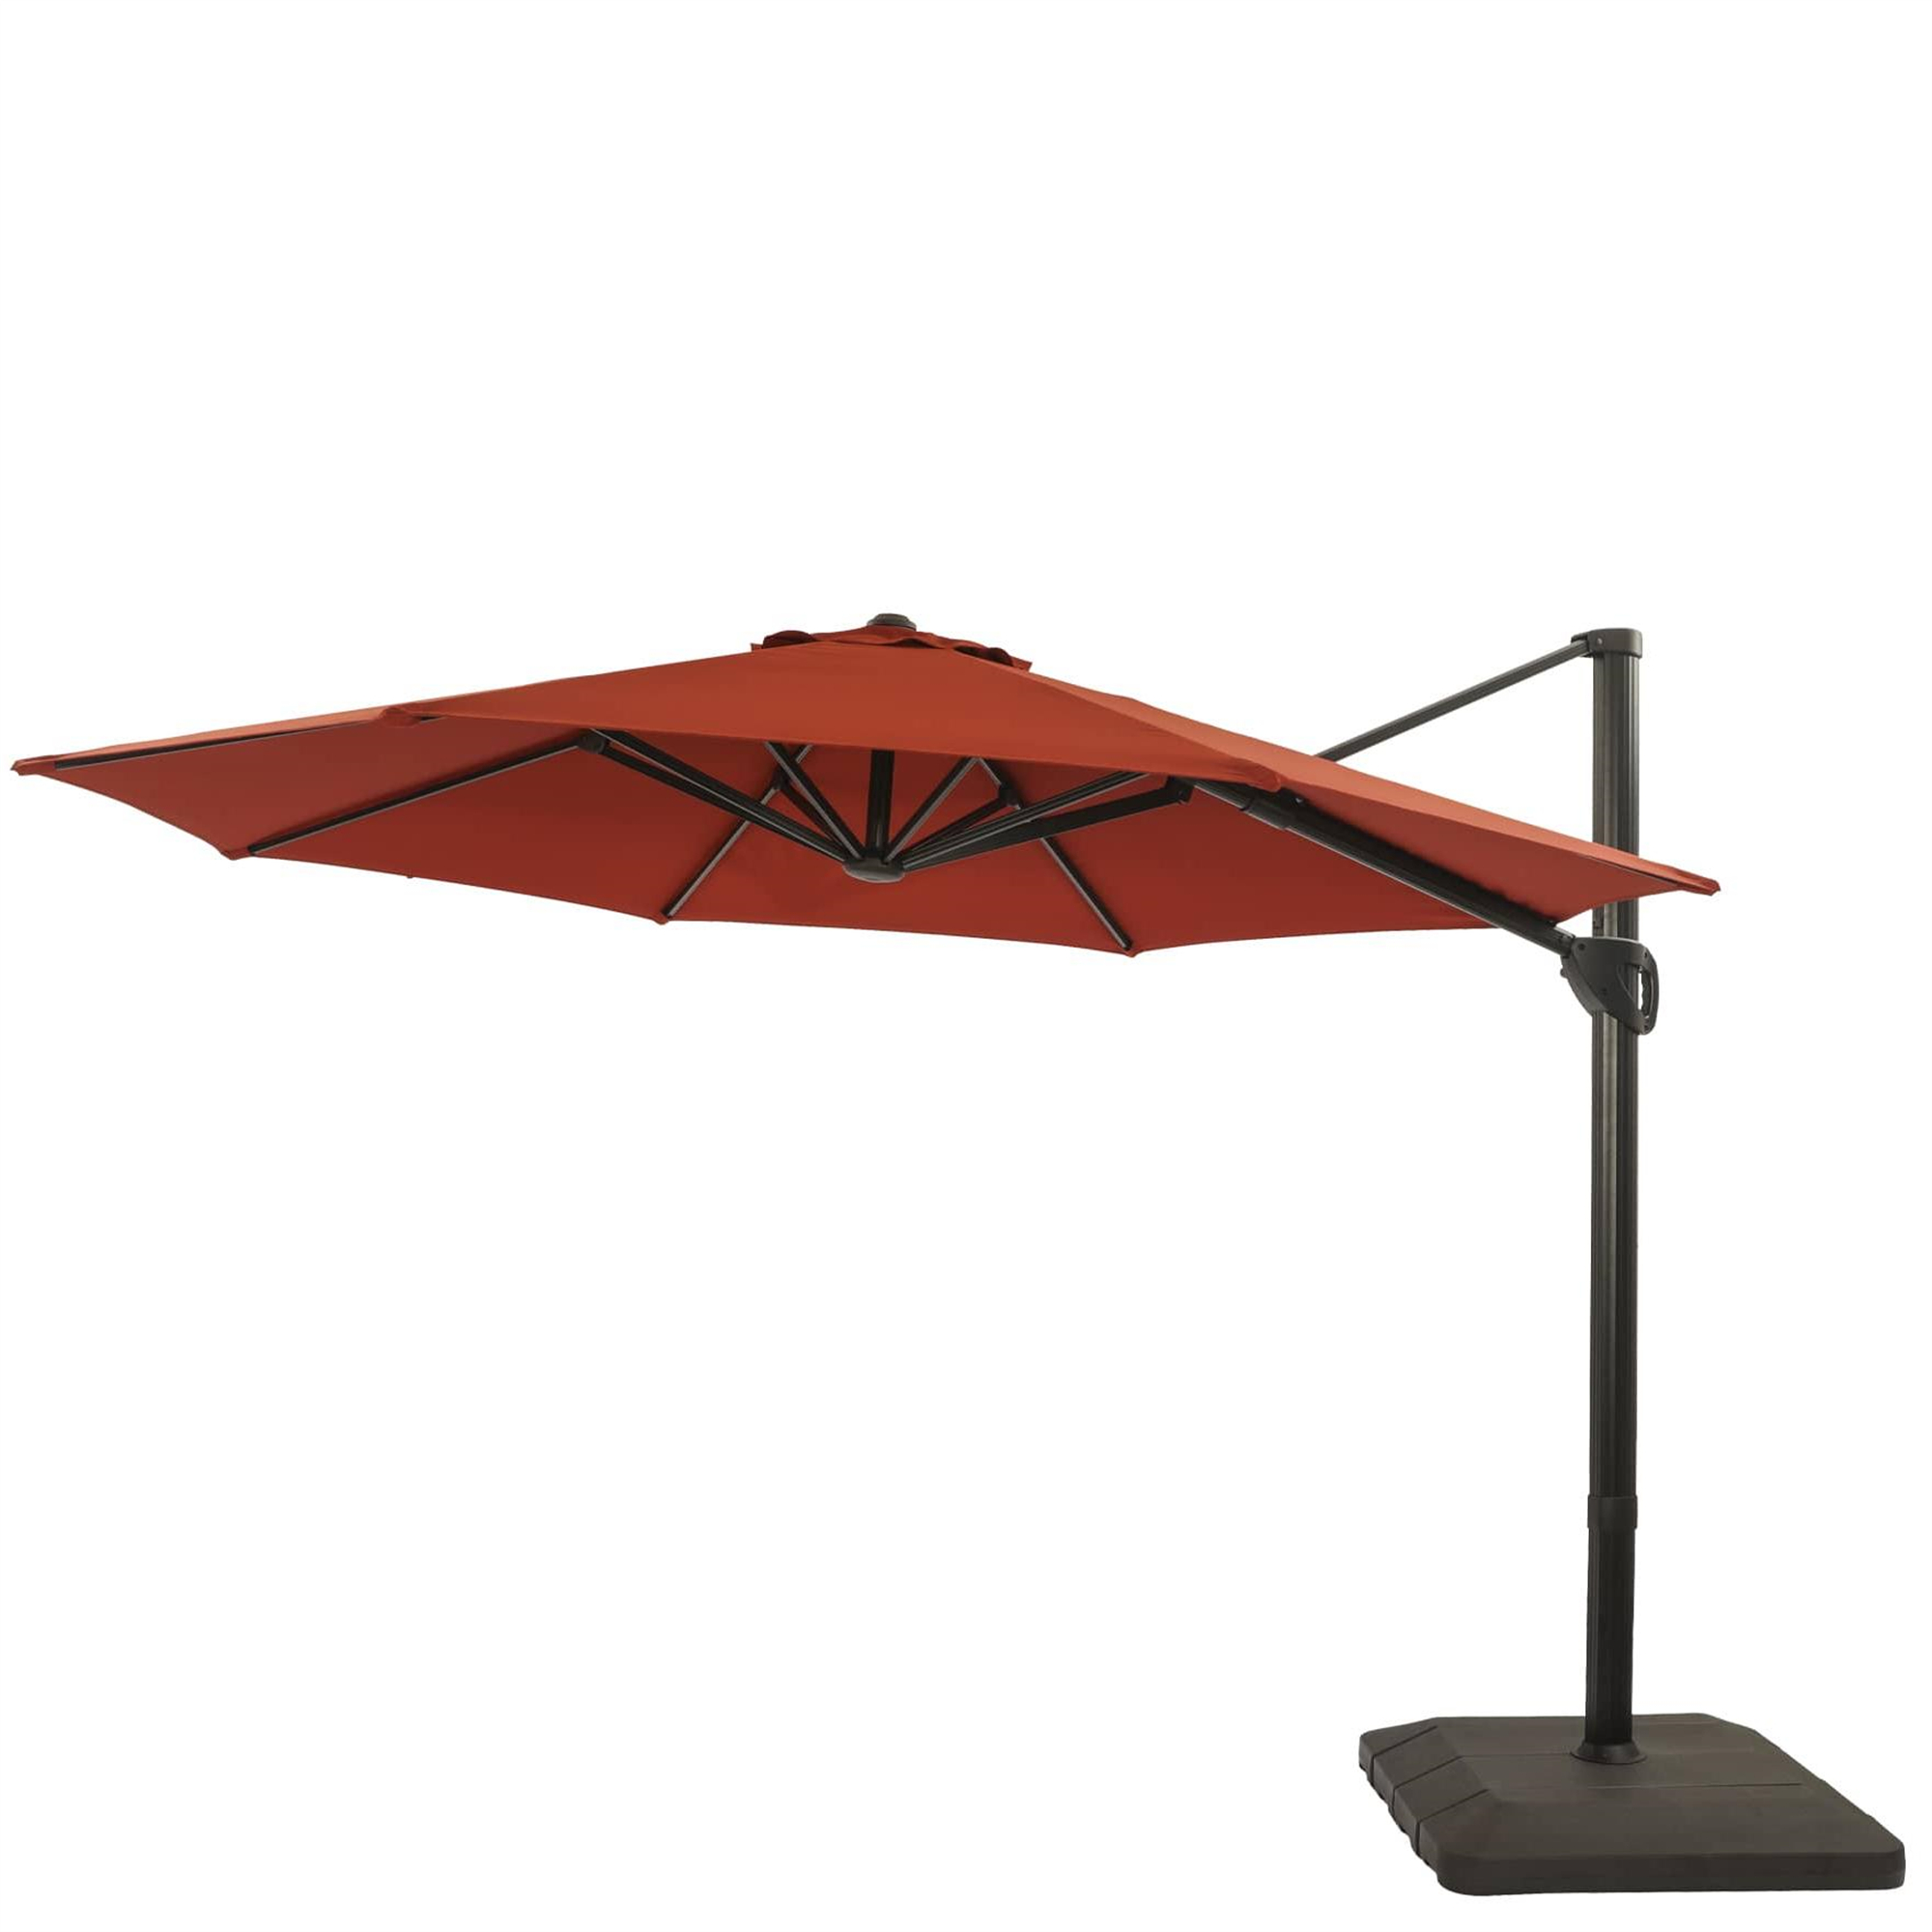 CASAINC 11Ft Patio Round Umbrella Outdoor Market Hanging Aluminum Umbrella with Crank and Base